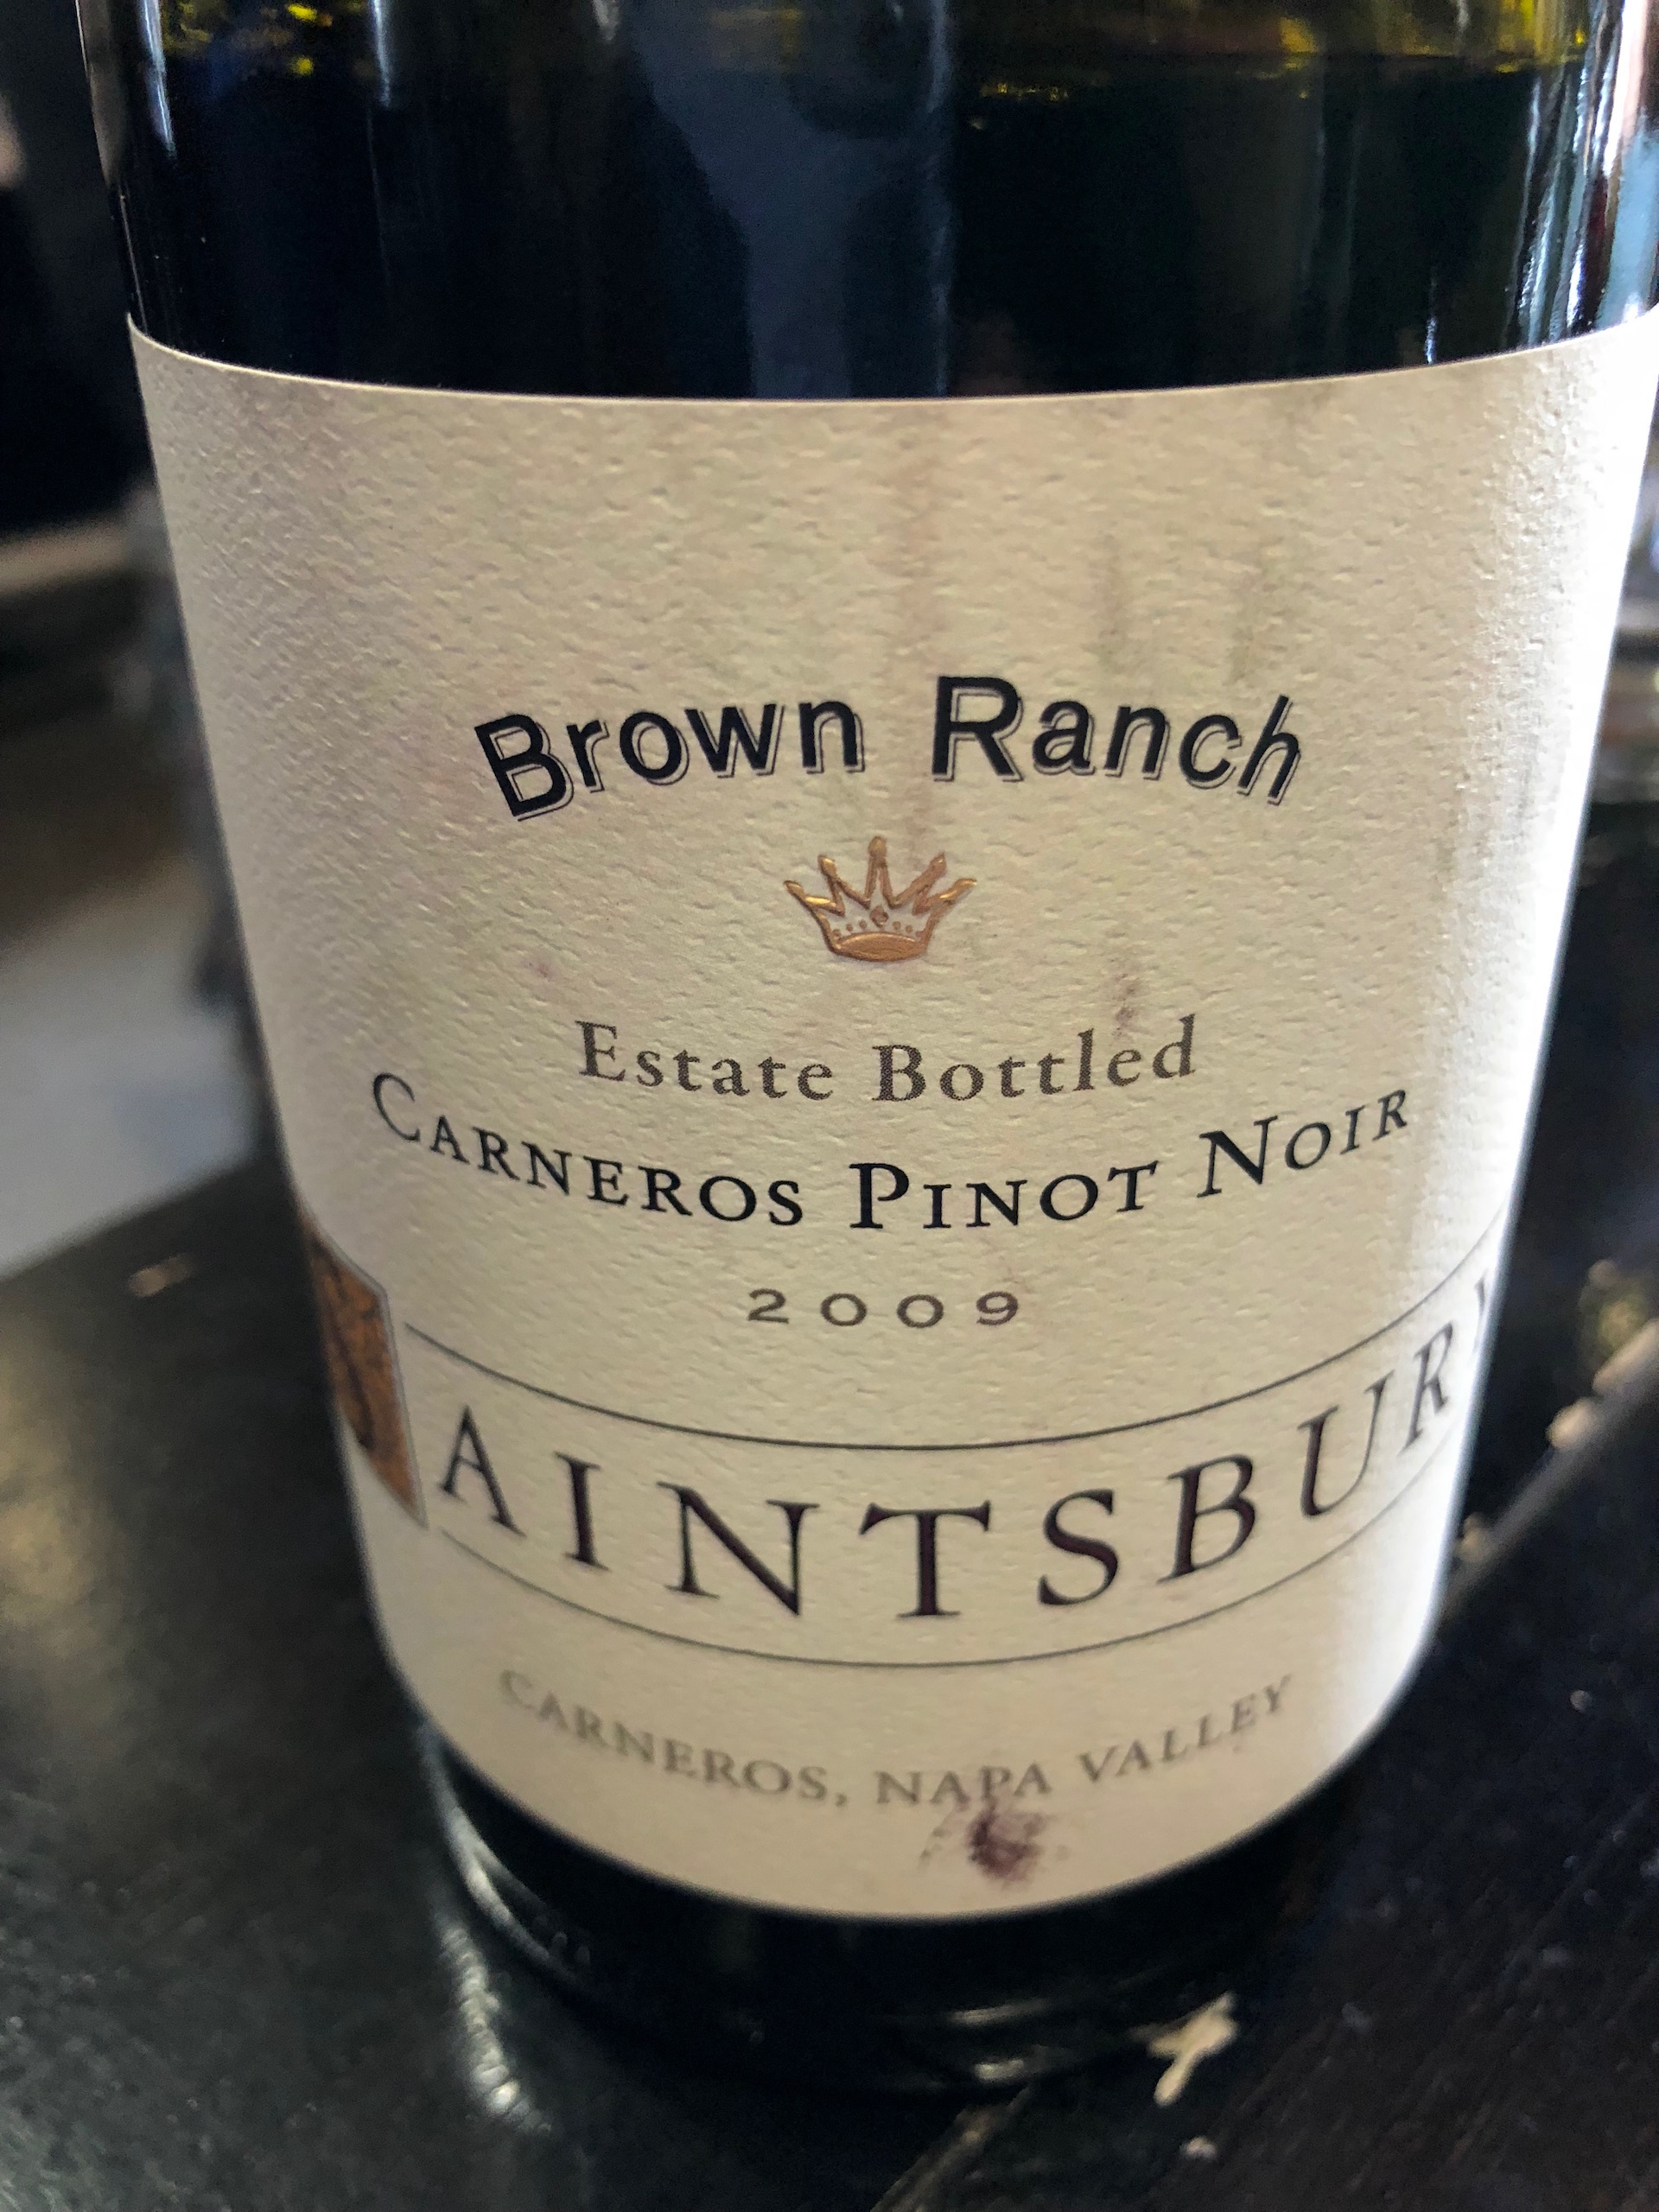 Saintsbury’s hard-to-find Brown Ranch estate Pinot Noir